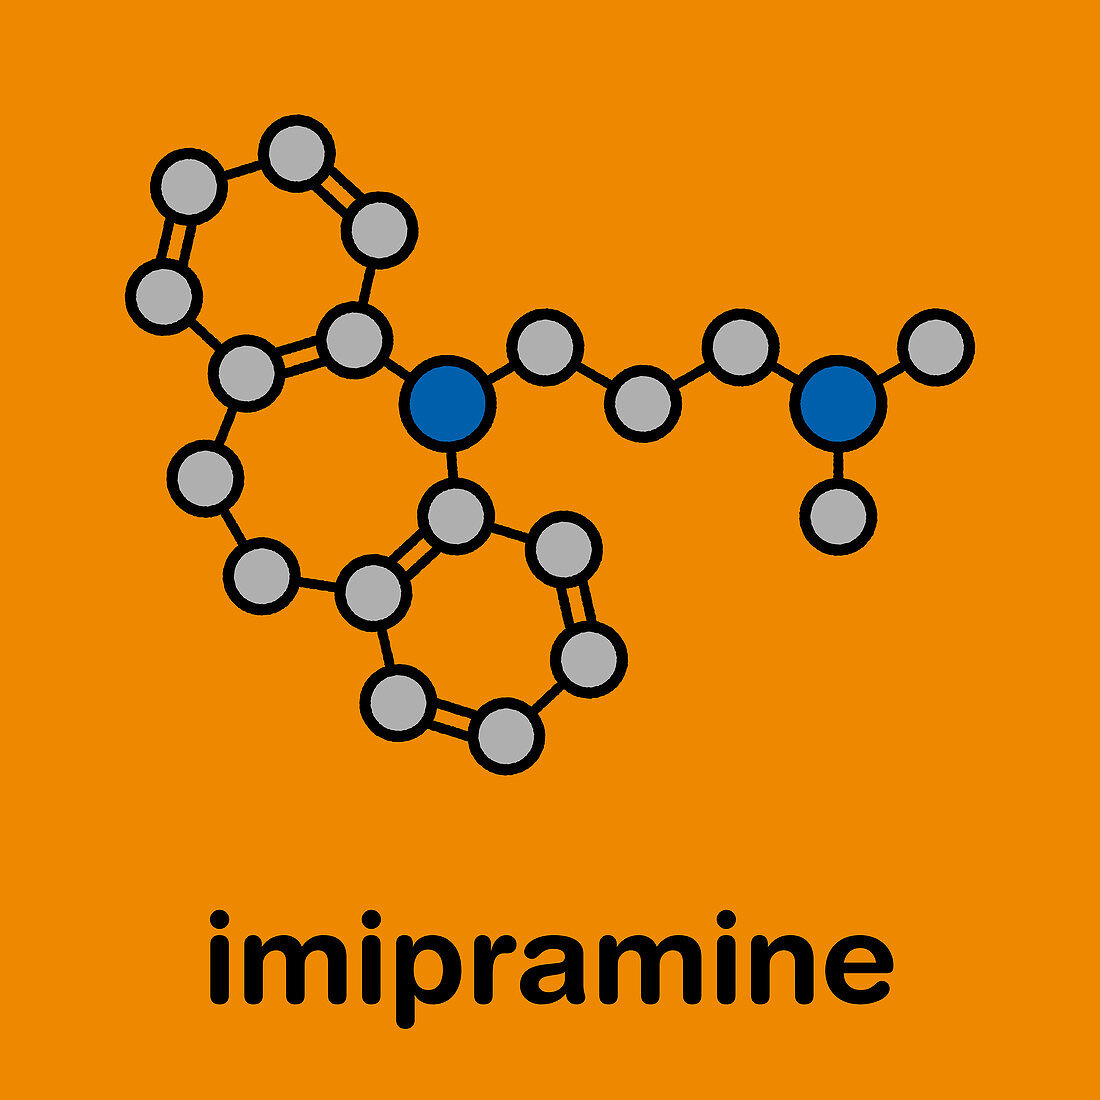 Imipramine antidepressant drug molecule, illustration